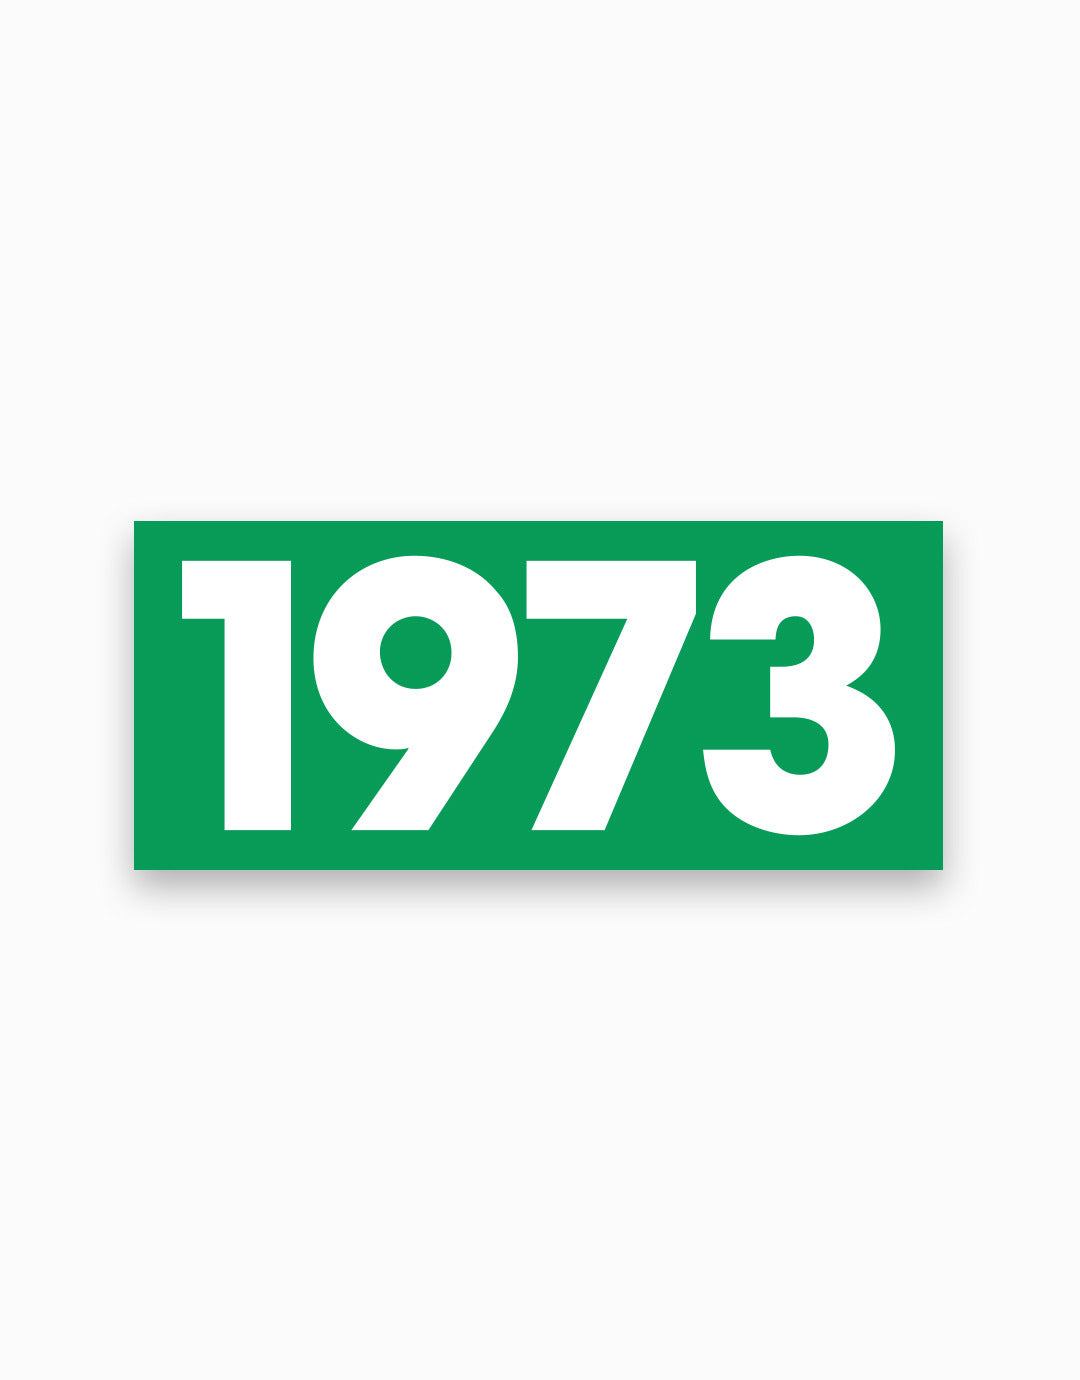 1973 Classic Sticker - Green